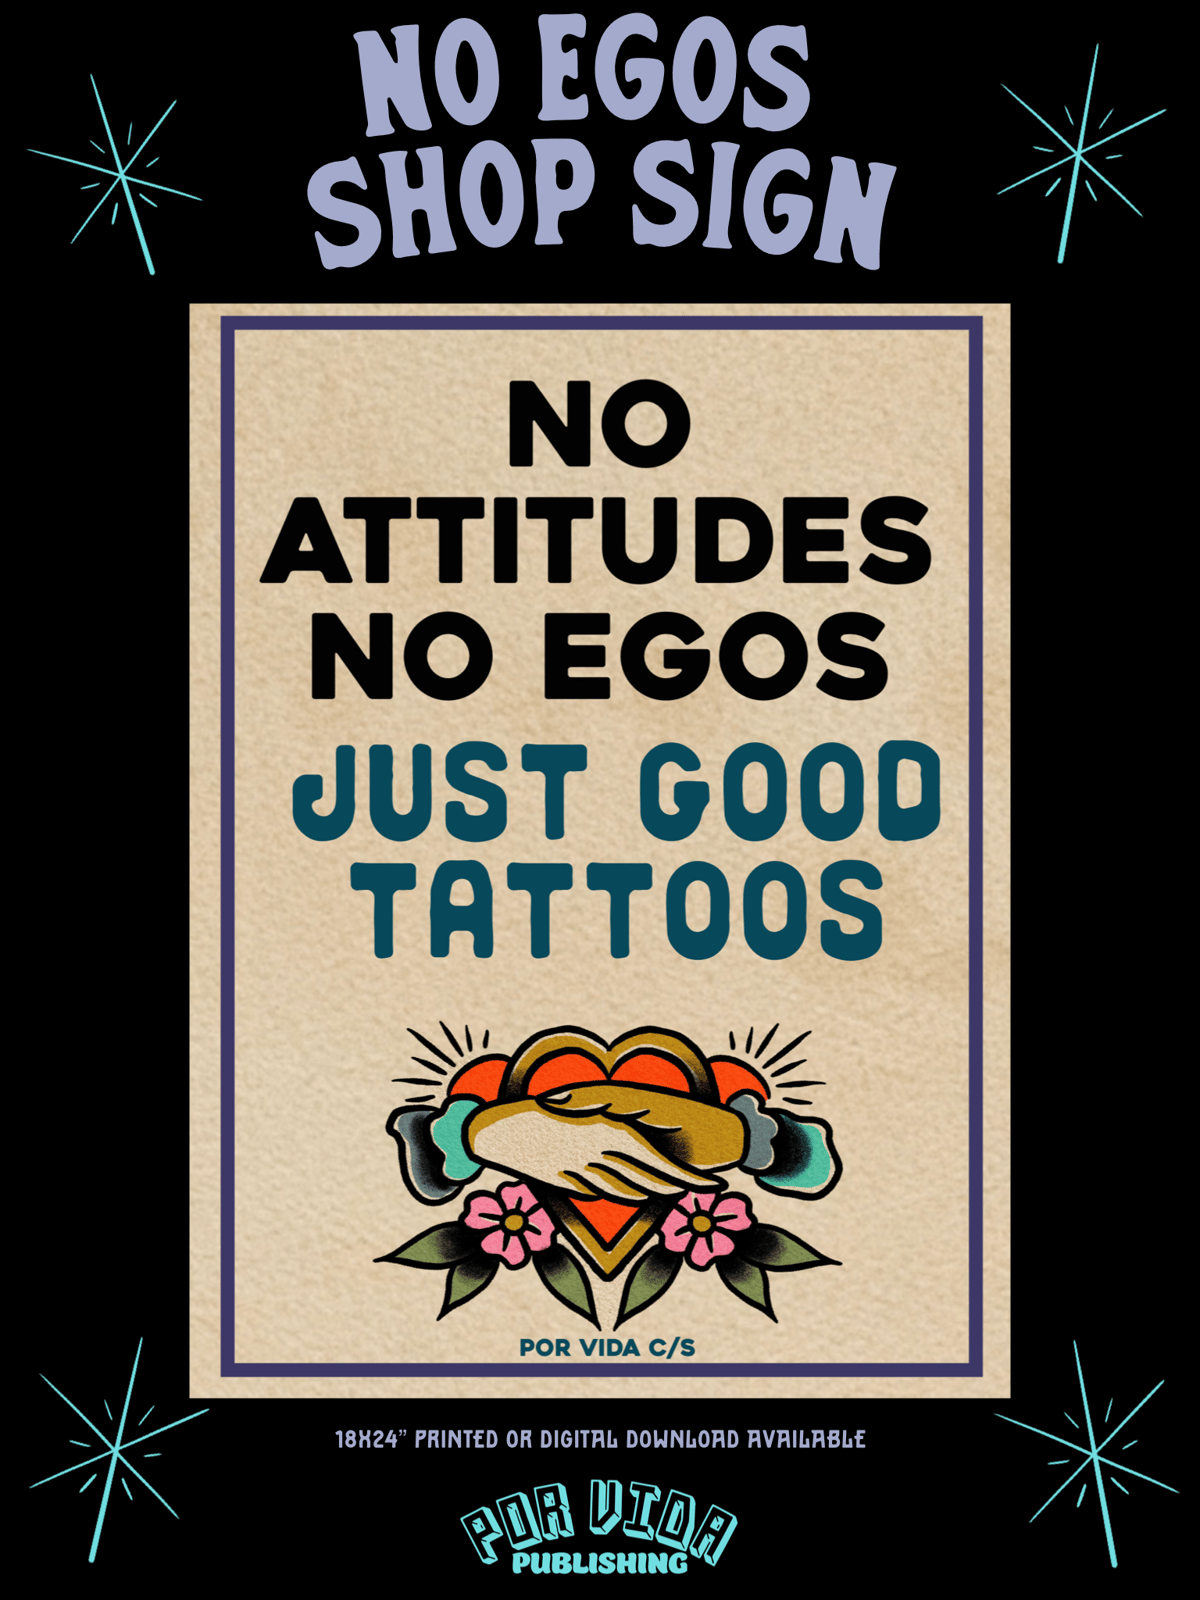 Image of No egos shop sign